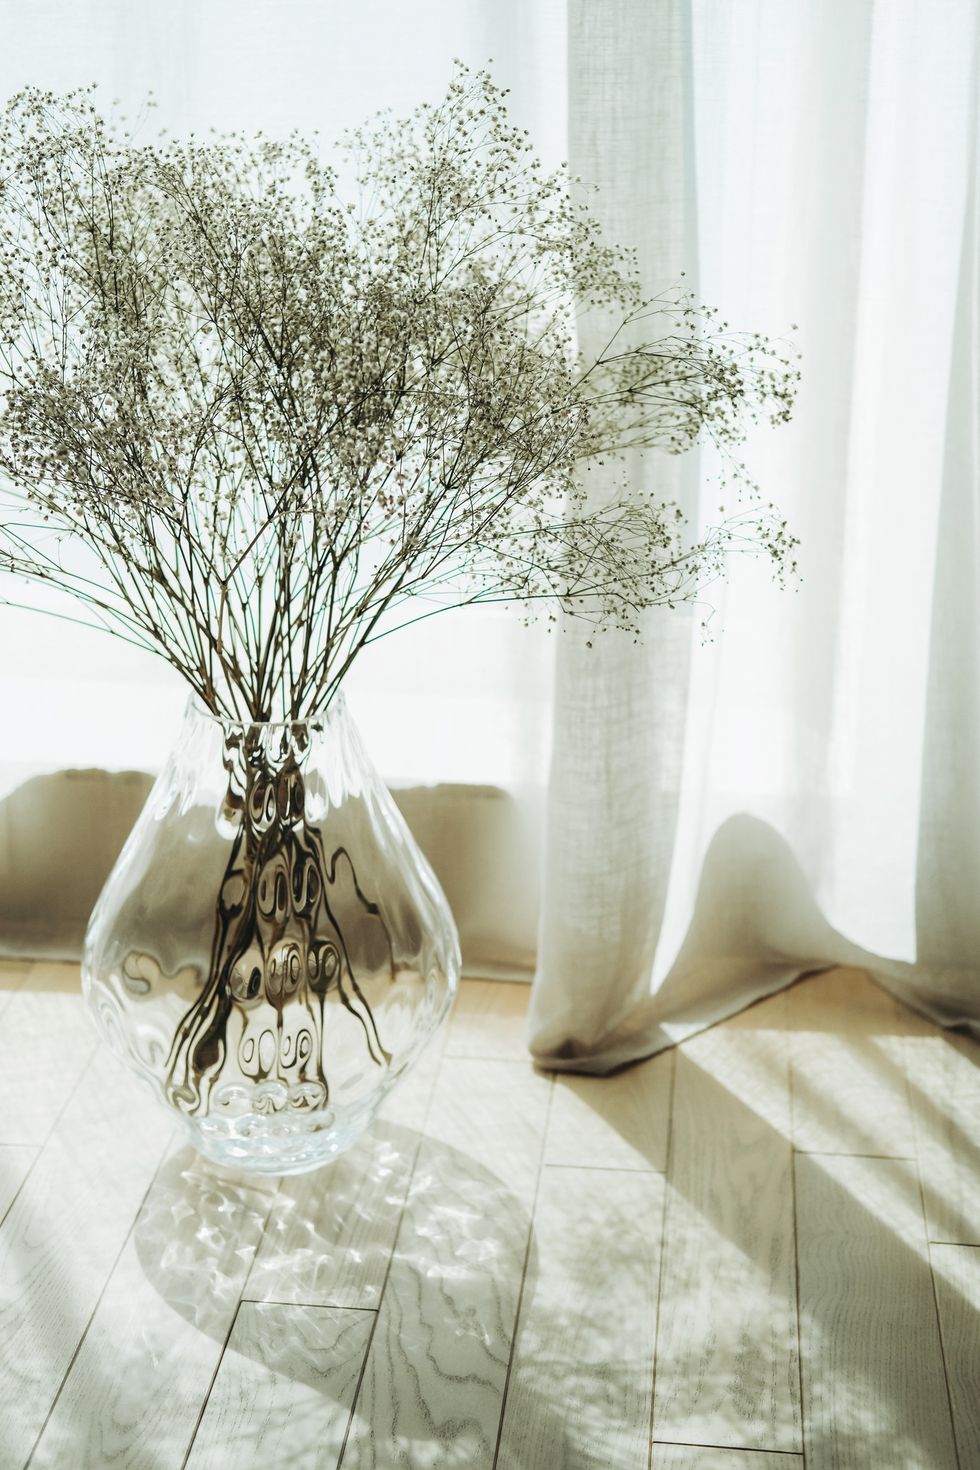 dry wild white petaled flowering plant in fancy vase on wooden flooring against light curtains